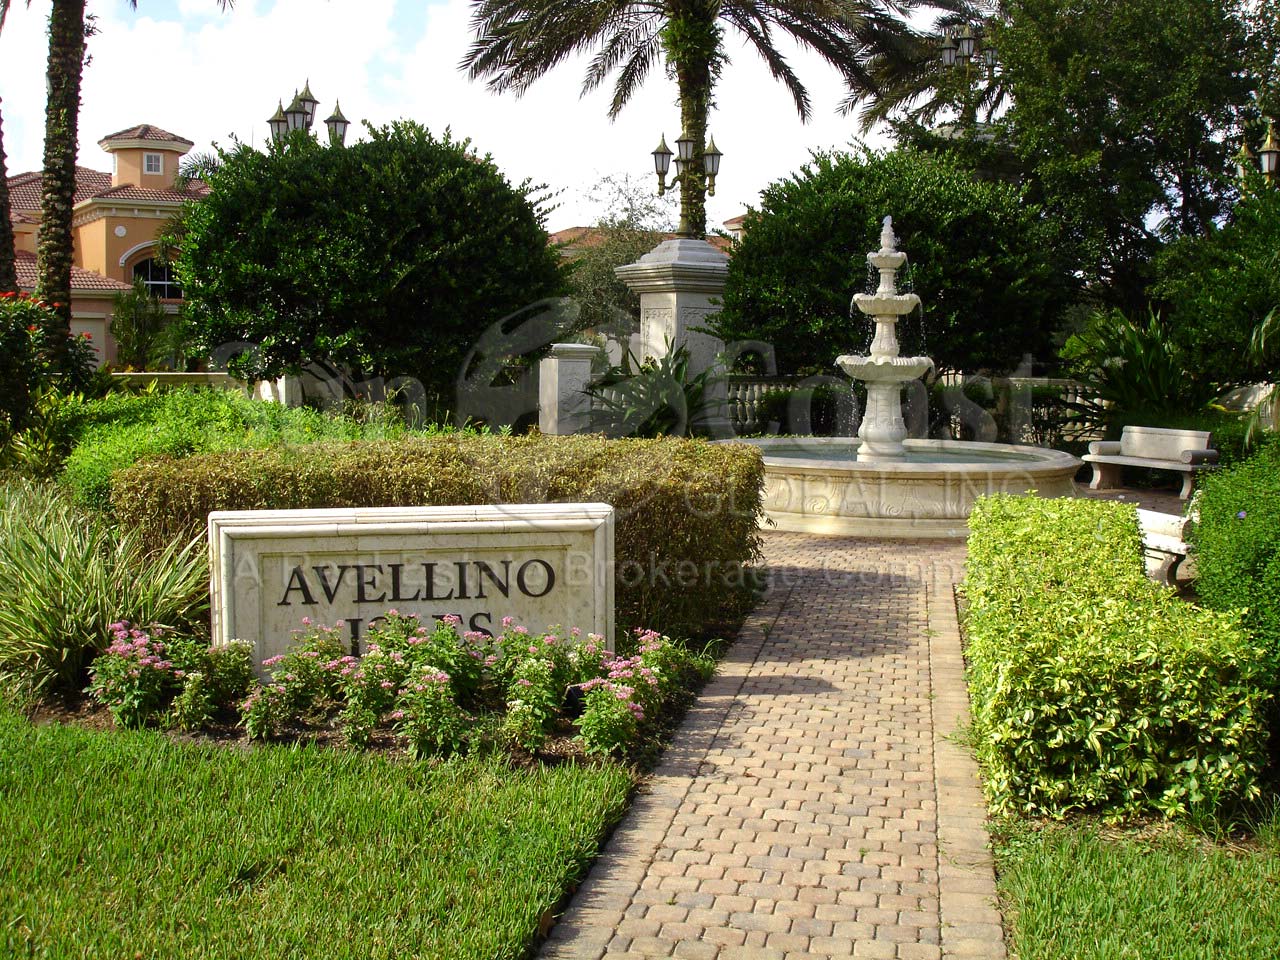 Avellino Isles entrance